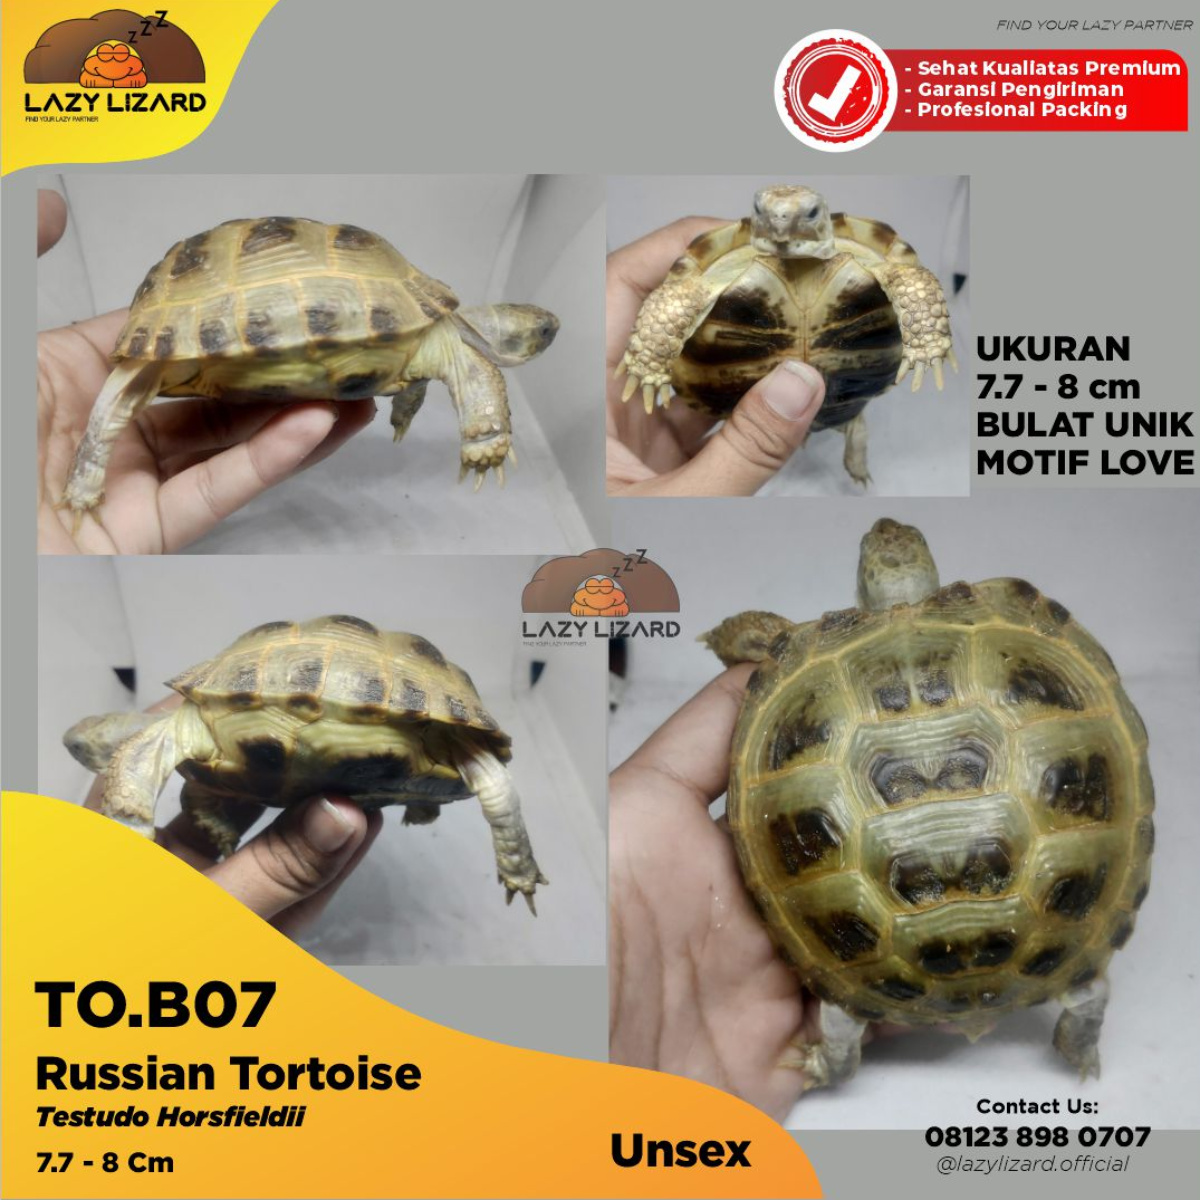 Russian Tortoise, Kura Rusia Bentuk Lope Lope